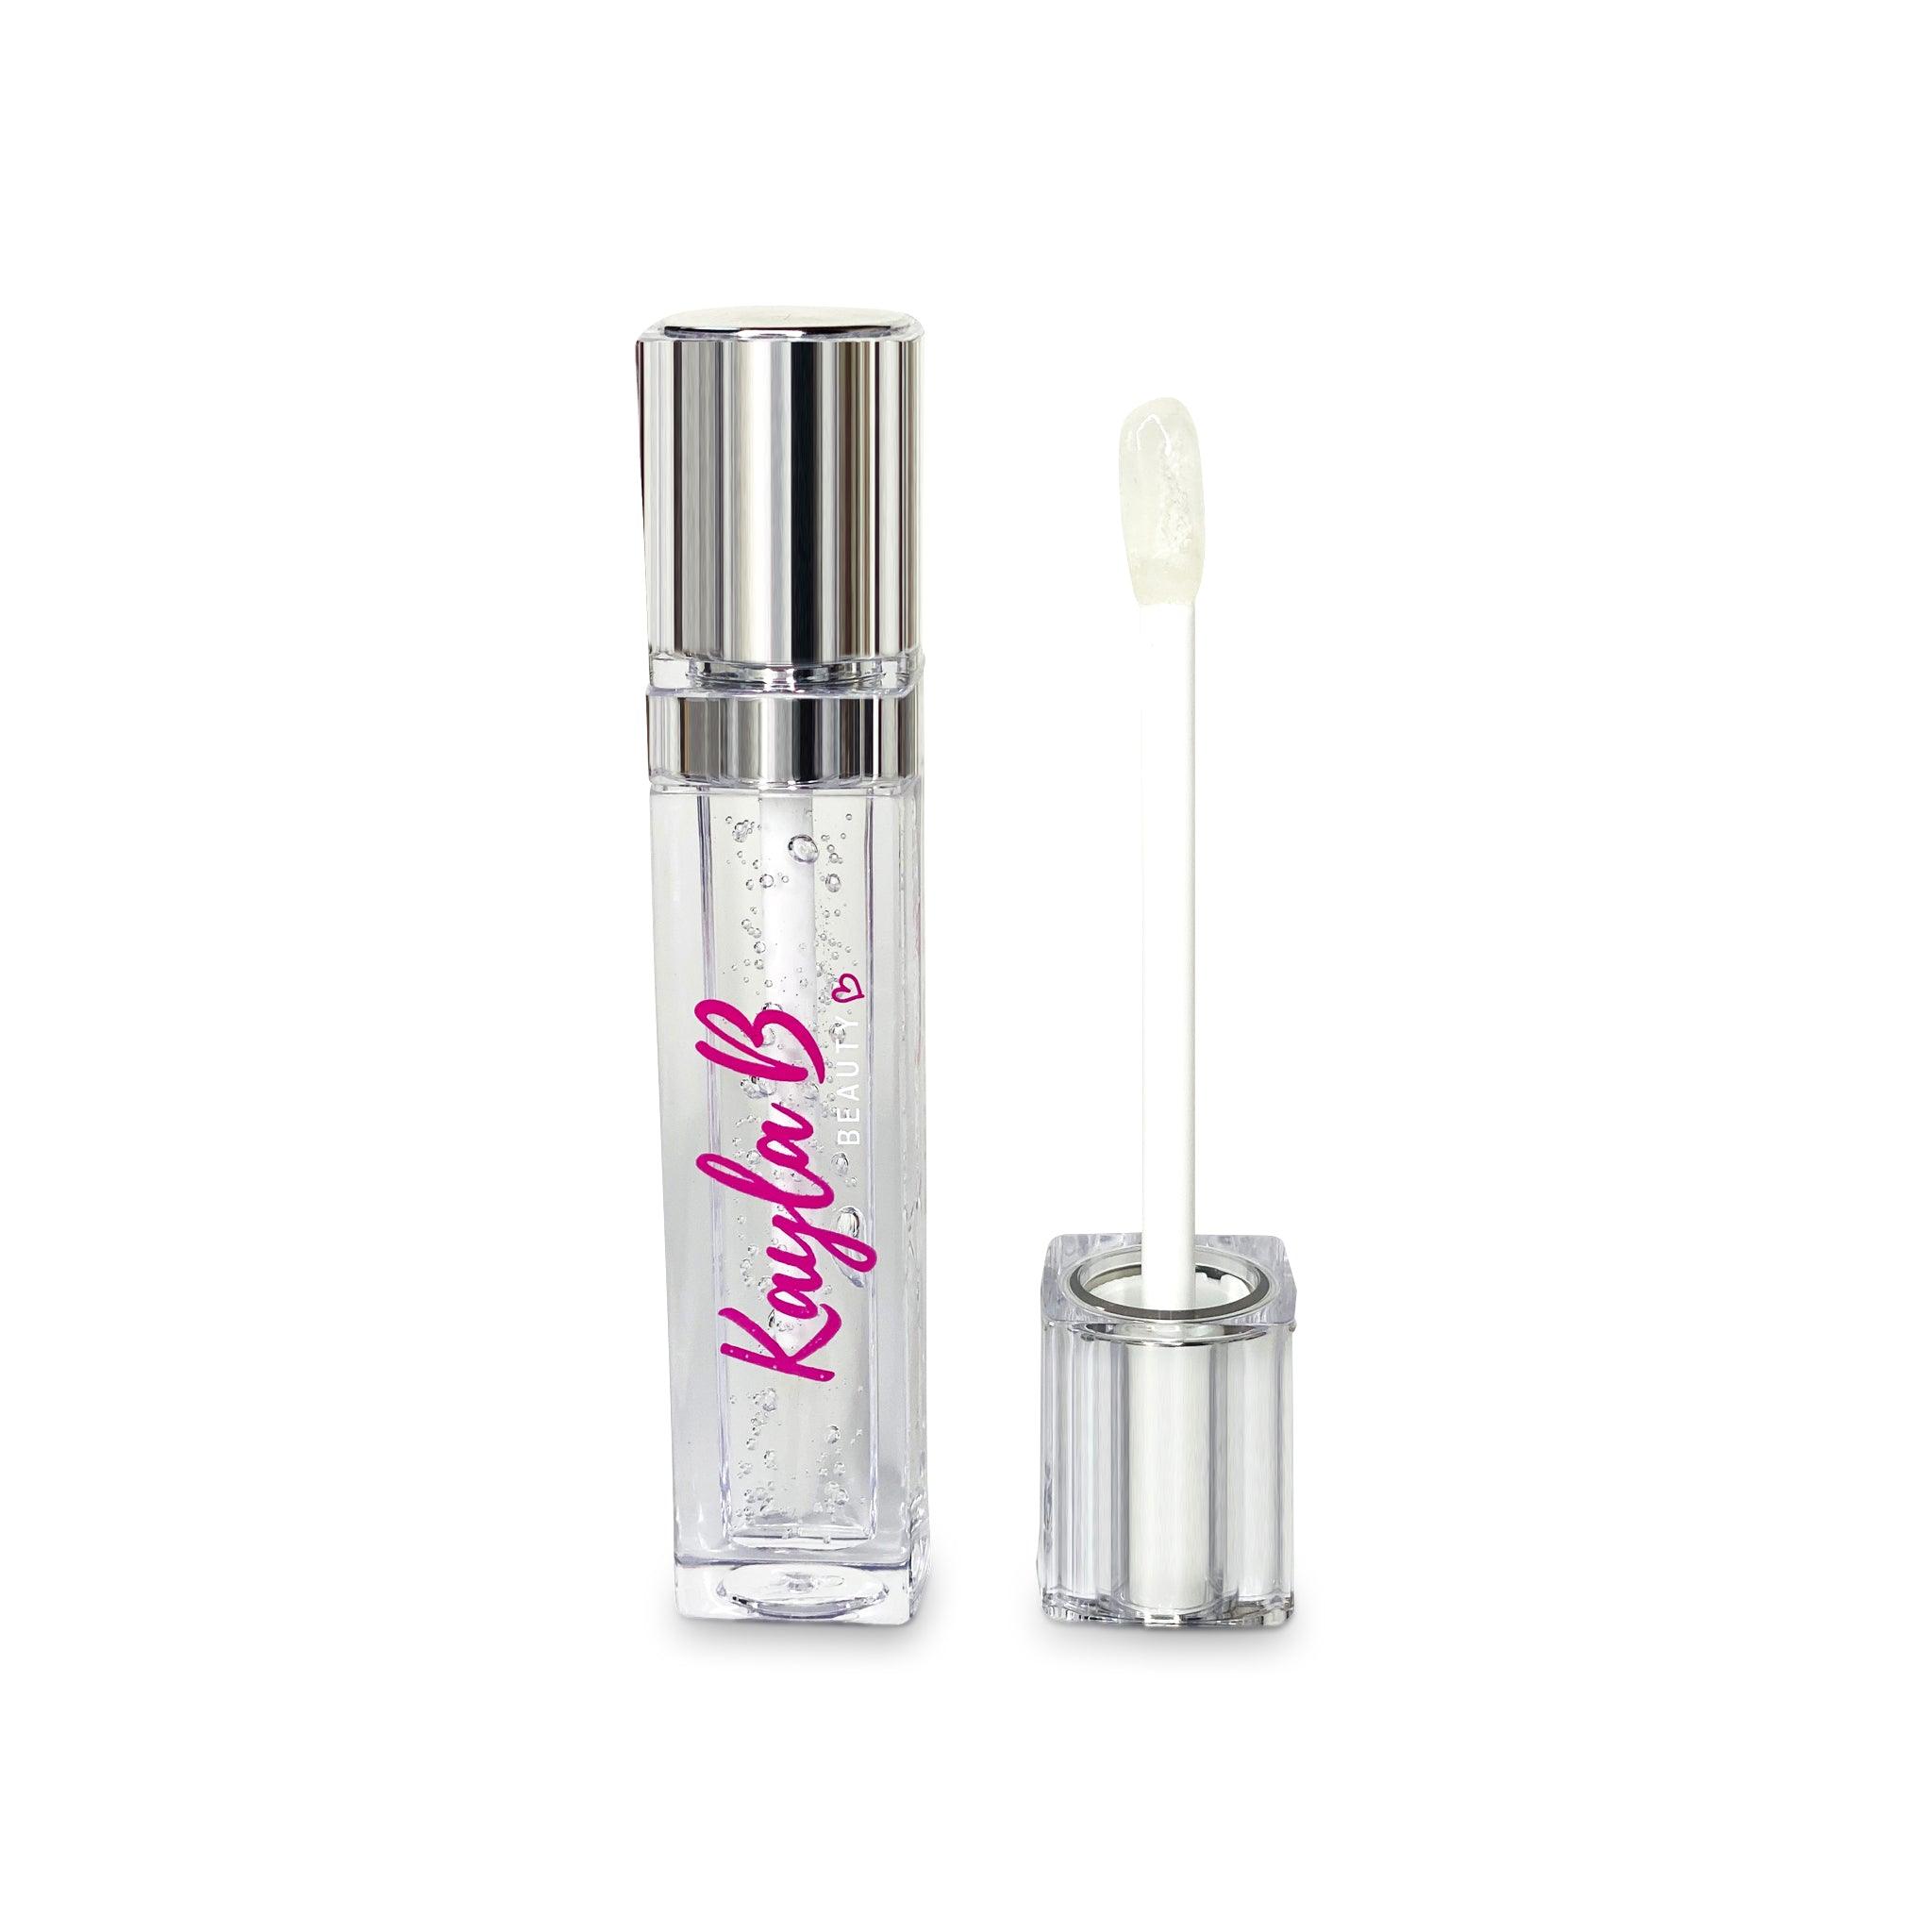 Angel - Kayla B Beauty - Clear Lip Gloss, Flavored Lip Gloss